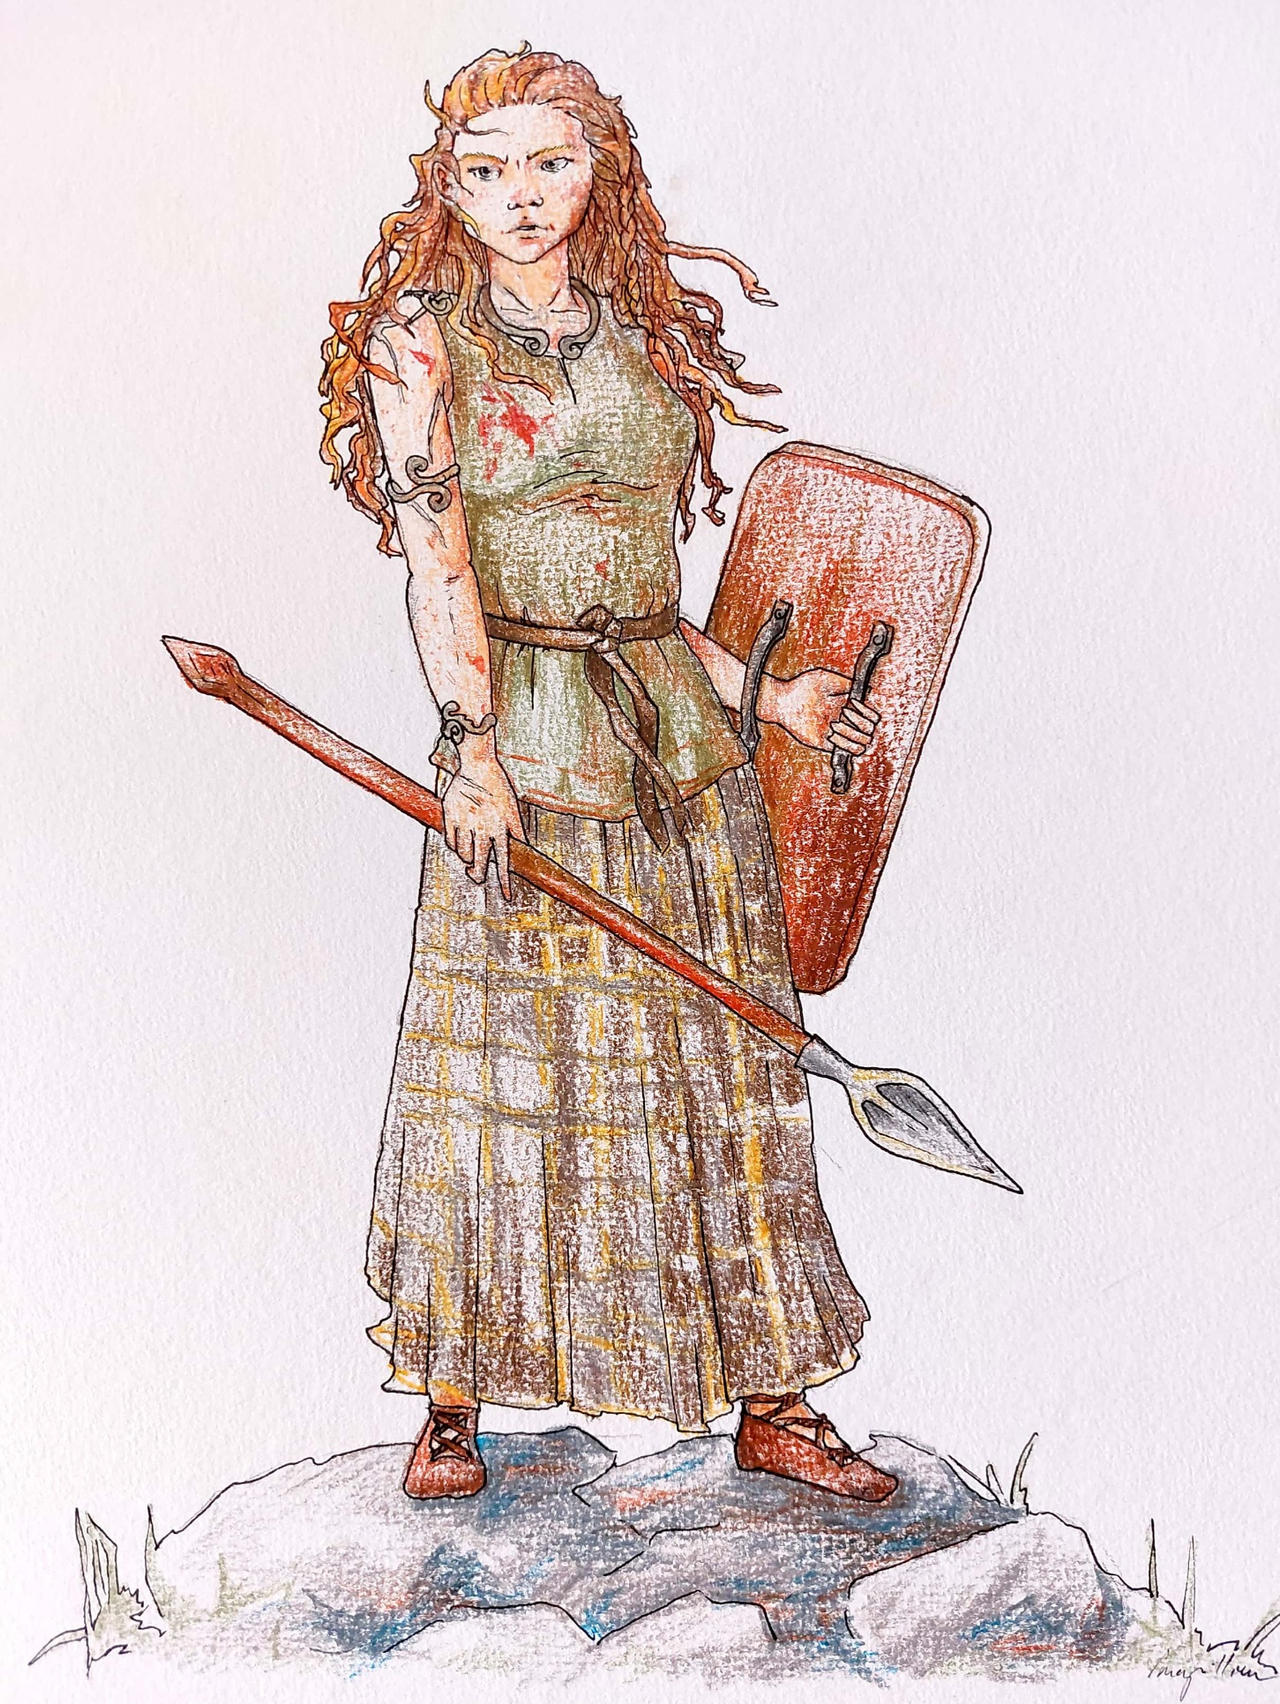 HWS: Medieval Shieldmaidens of the North by Gambargin on DeviantArt